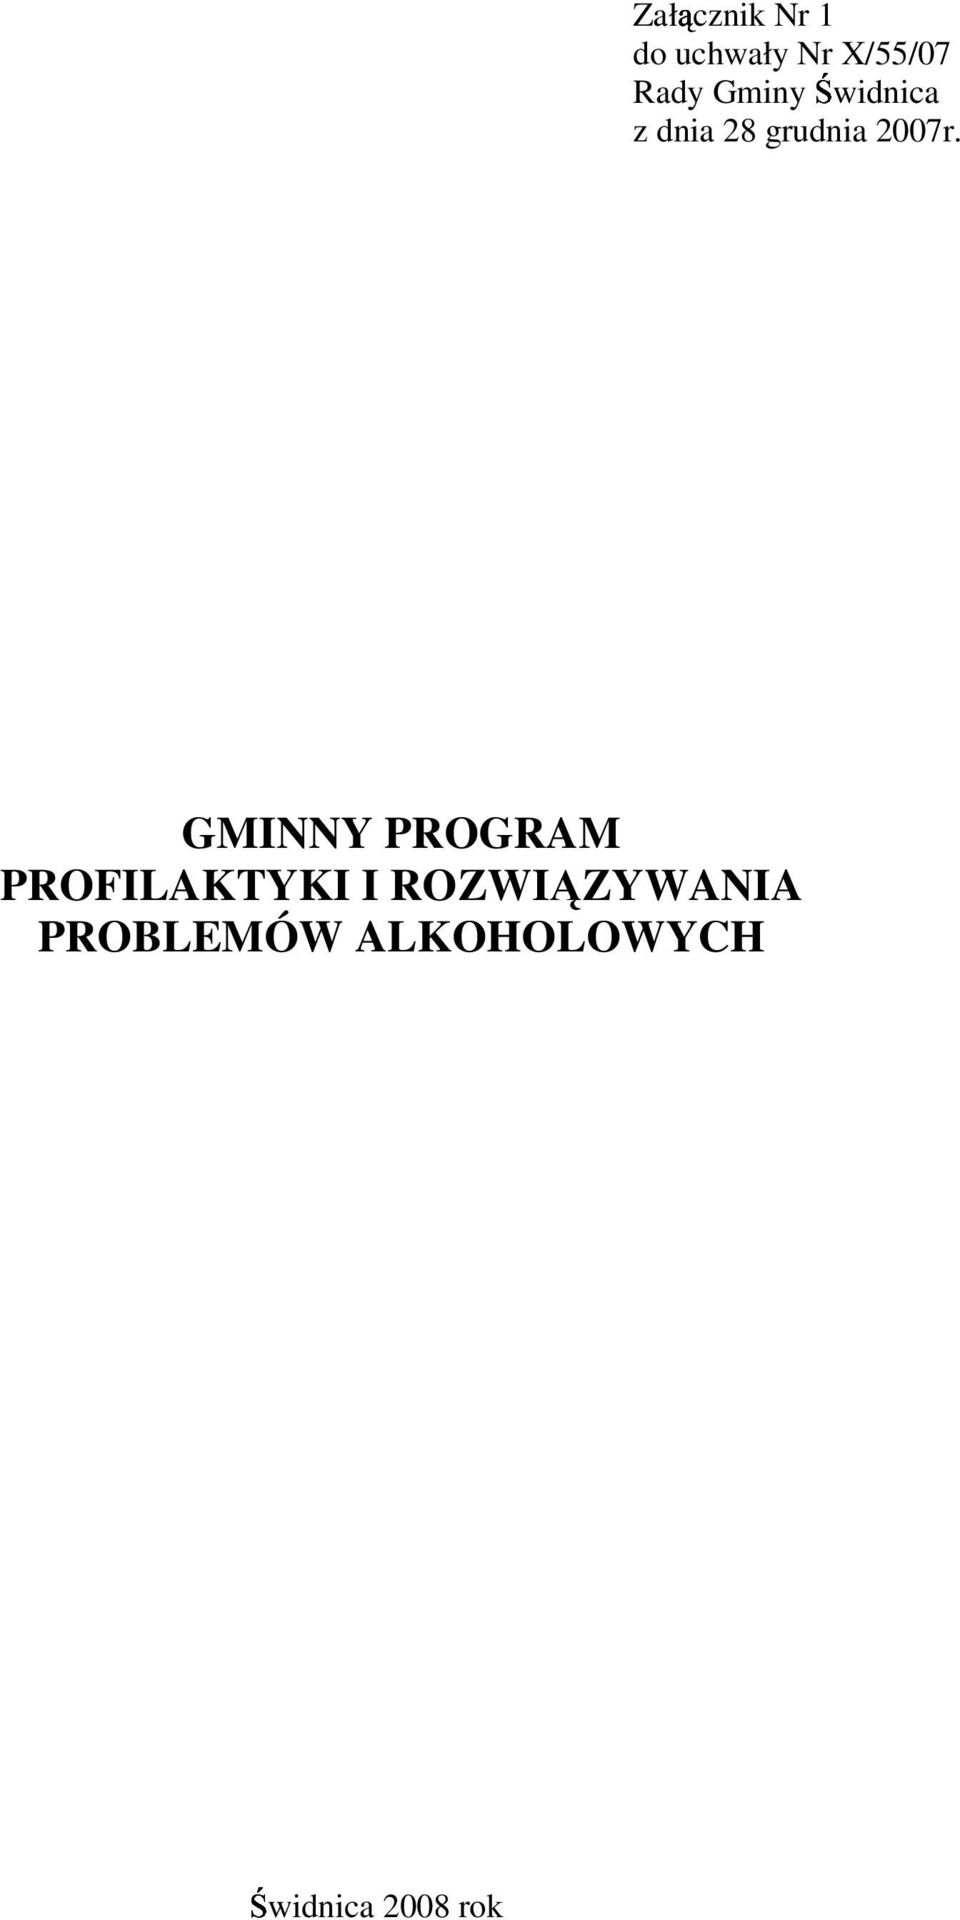 GMINNY PROGRAM PROFILAKTYKI I